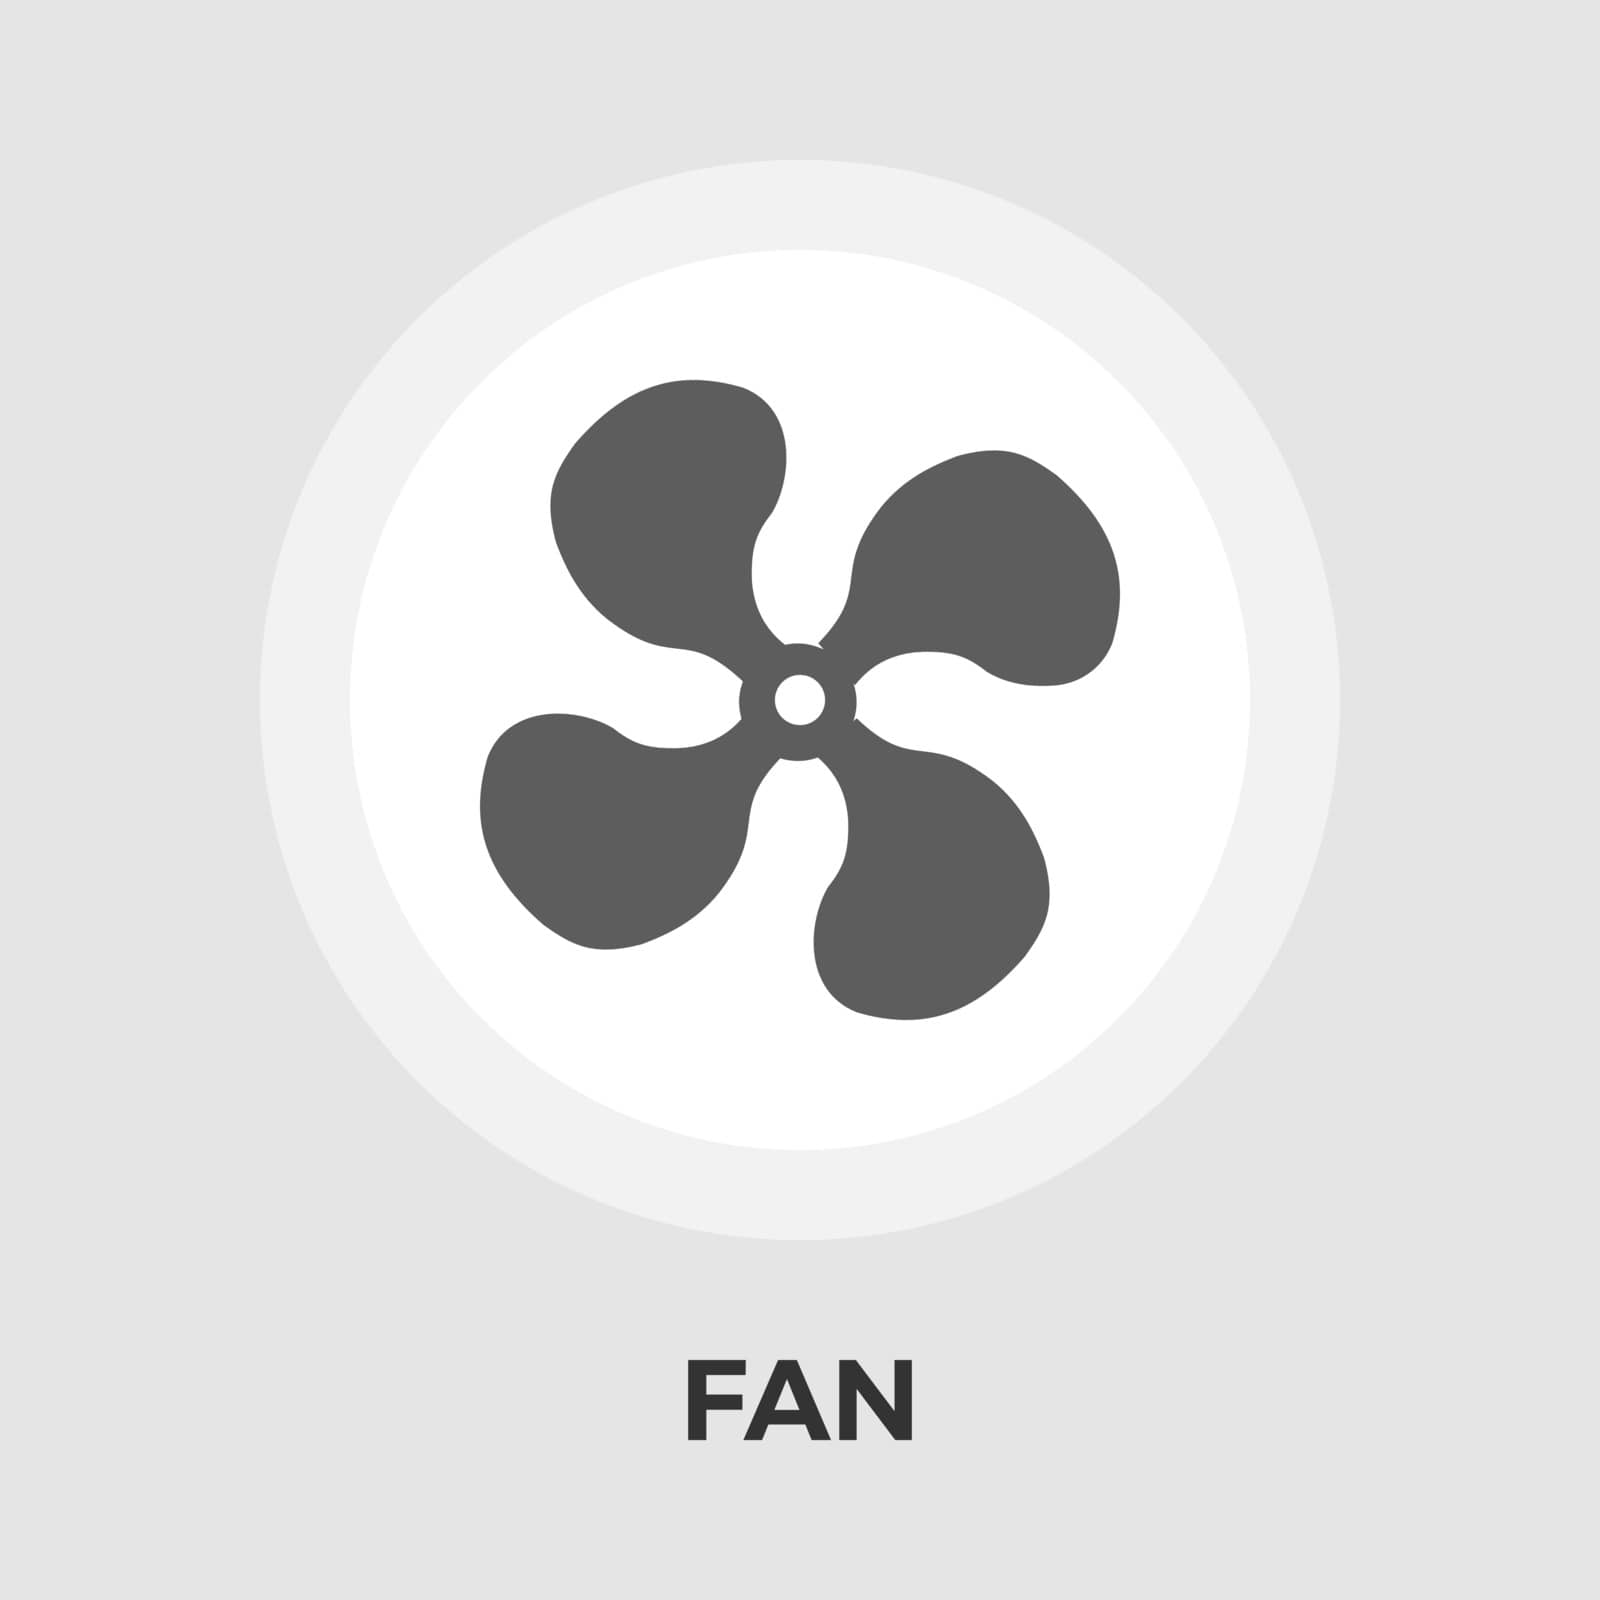 Fan flat icon by smoki